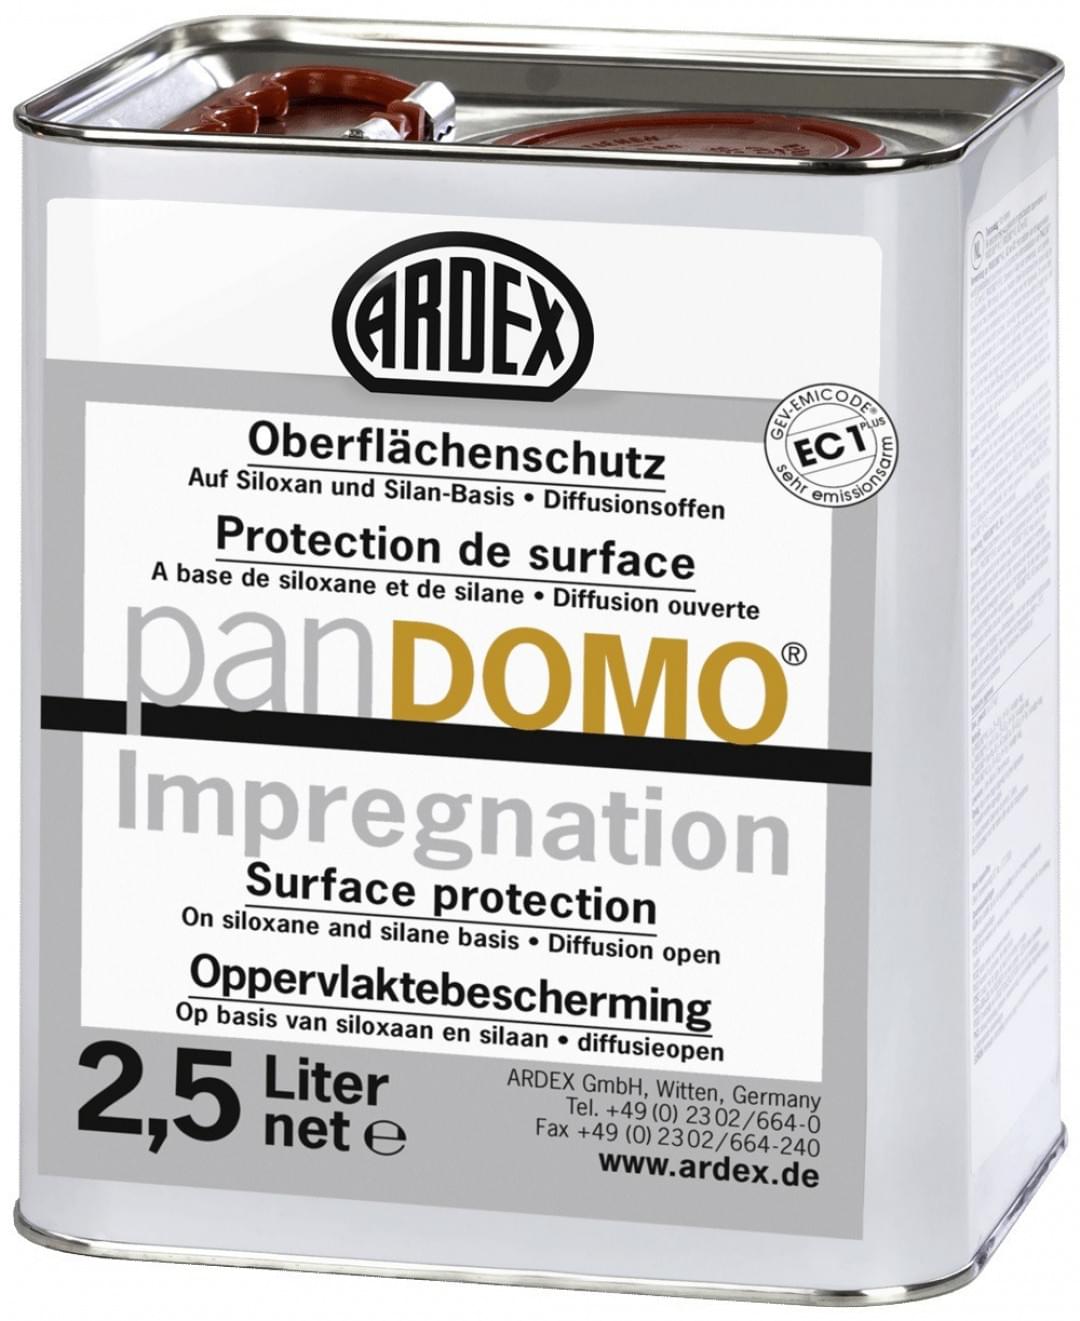 PANDOMO® Impregnation from ARDEX